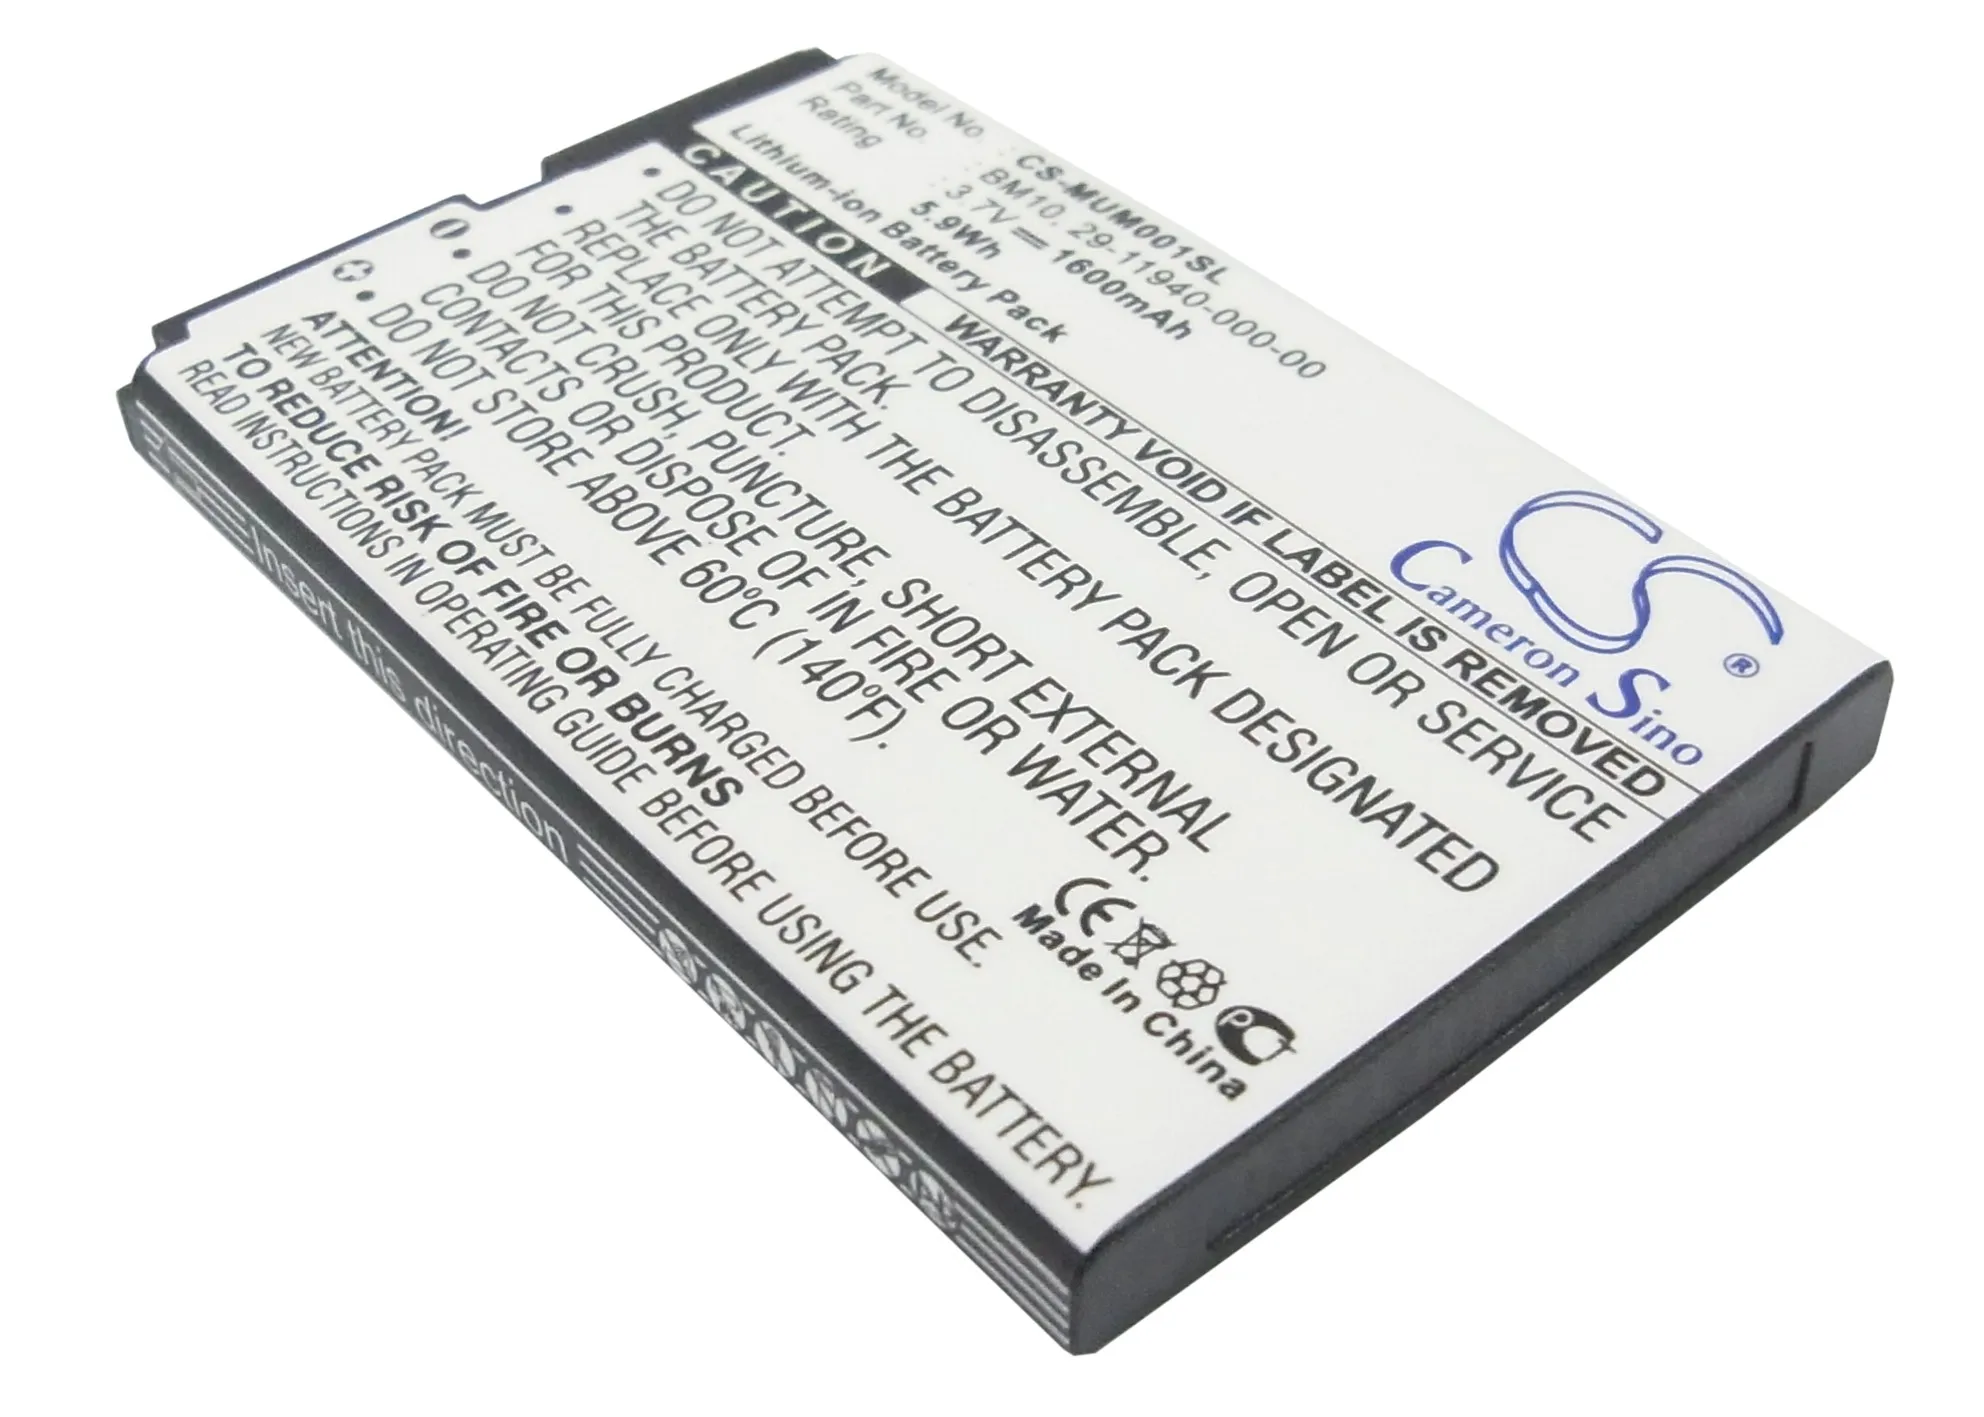 

CS 1600mAh/5.9Wh battery for Xiaomi M1, MI-ONE, MI-ONE Plus 29-11940-000-00, BM10